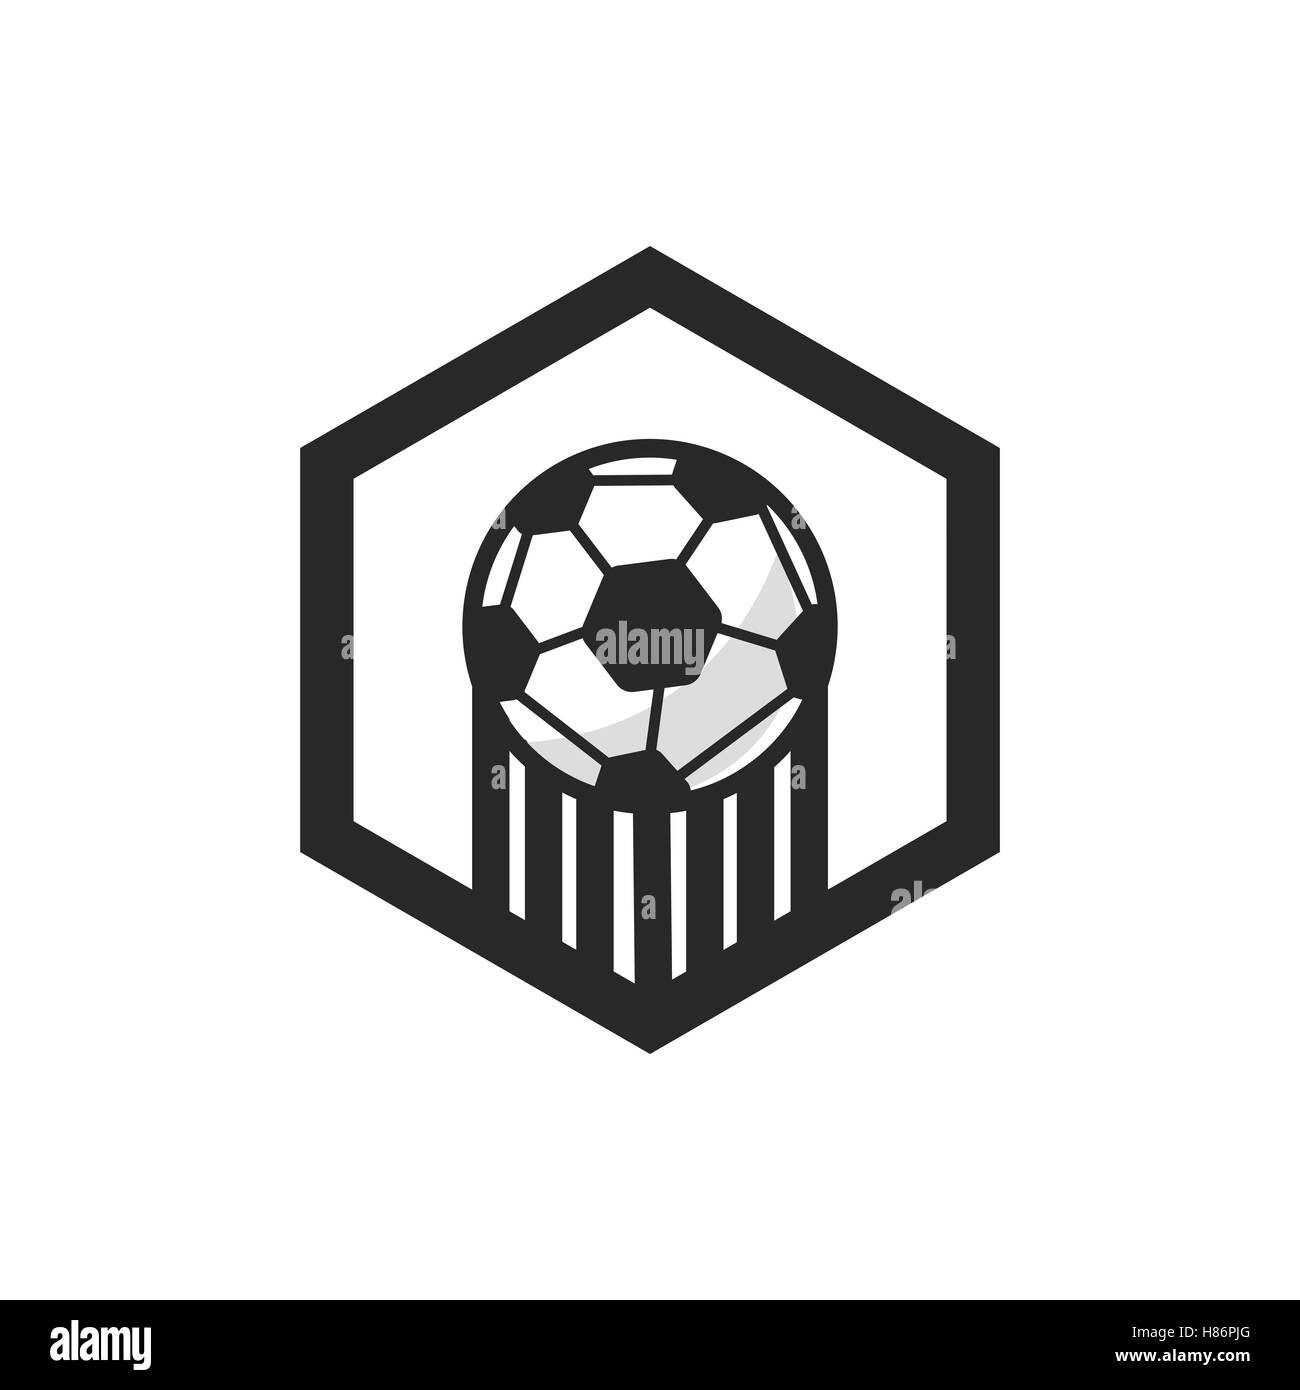 Logo and Football or Soccer Badge Vector Stock Photo